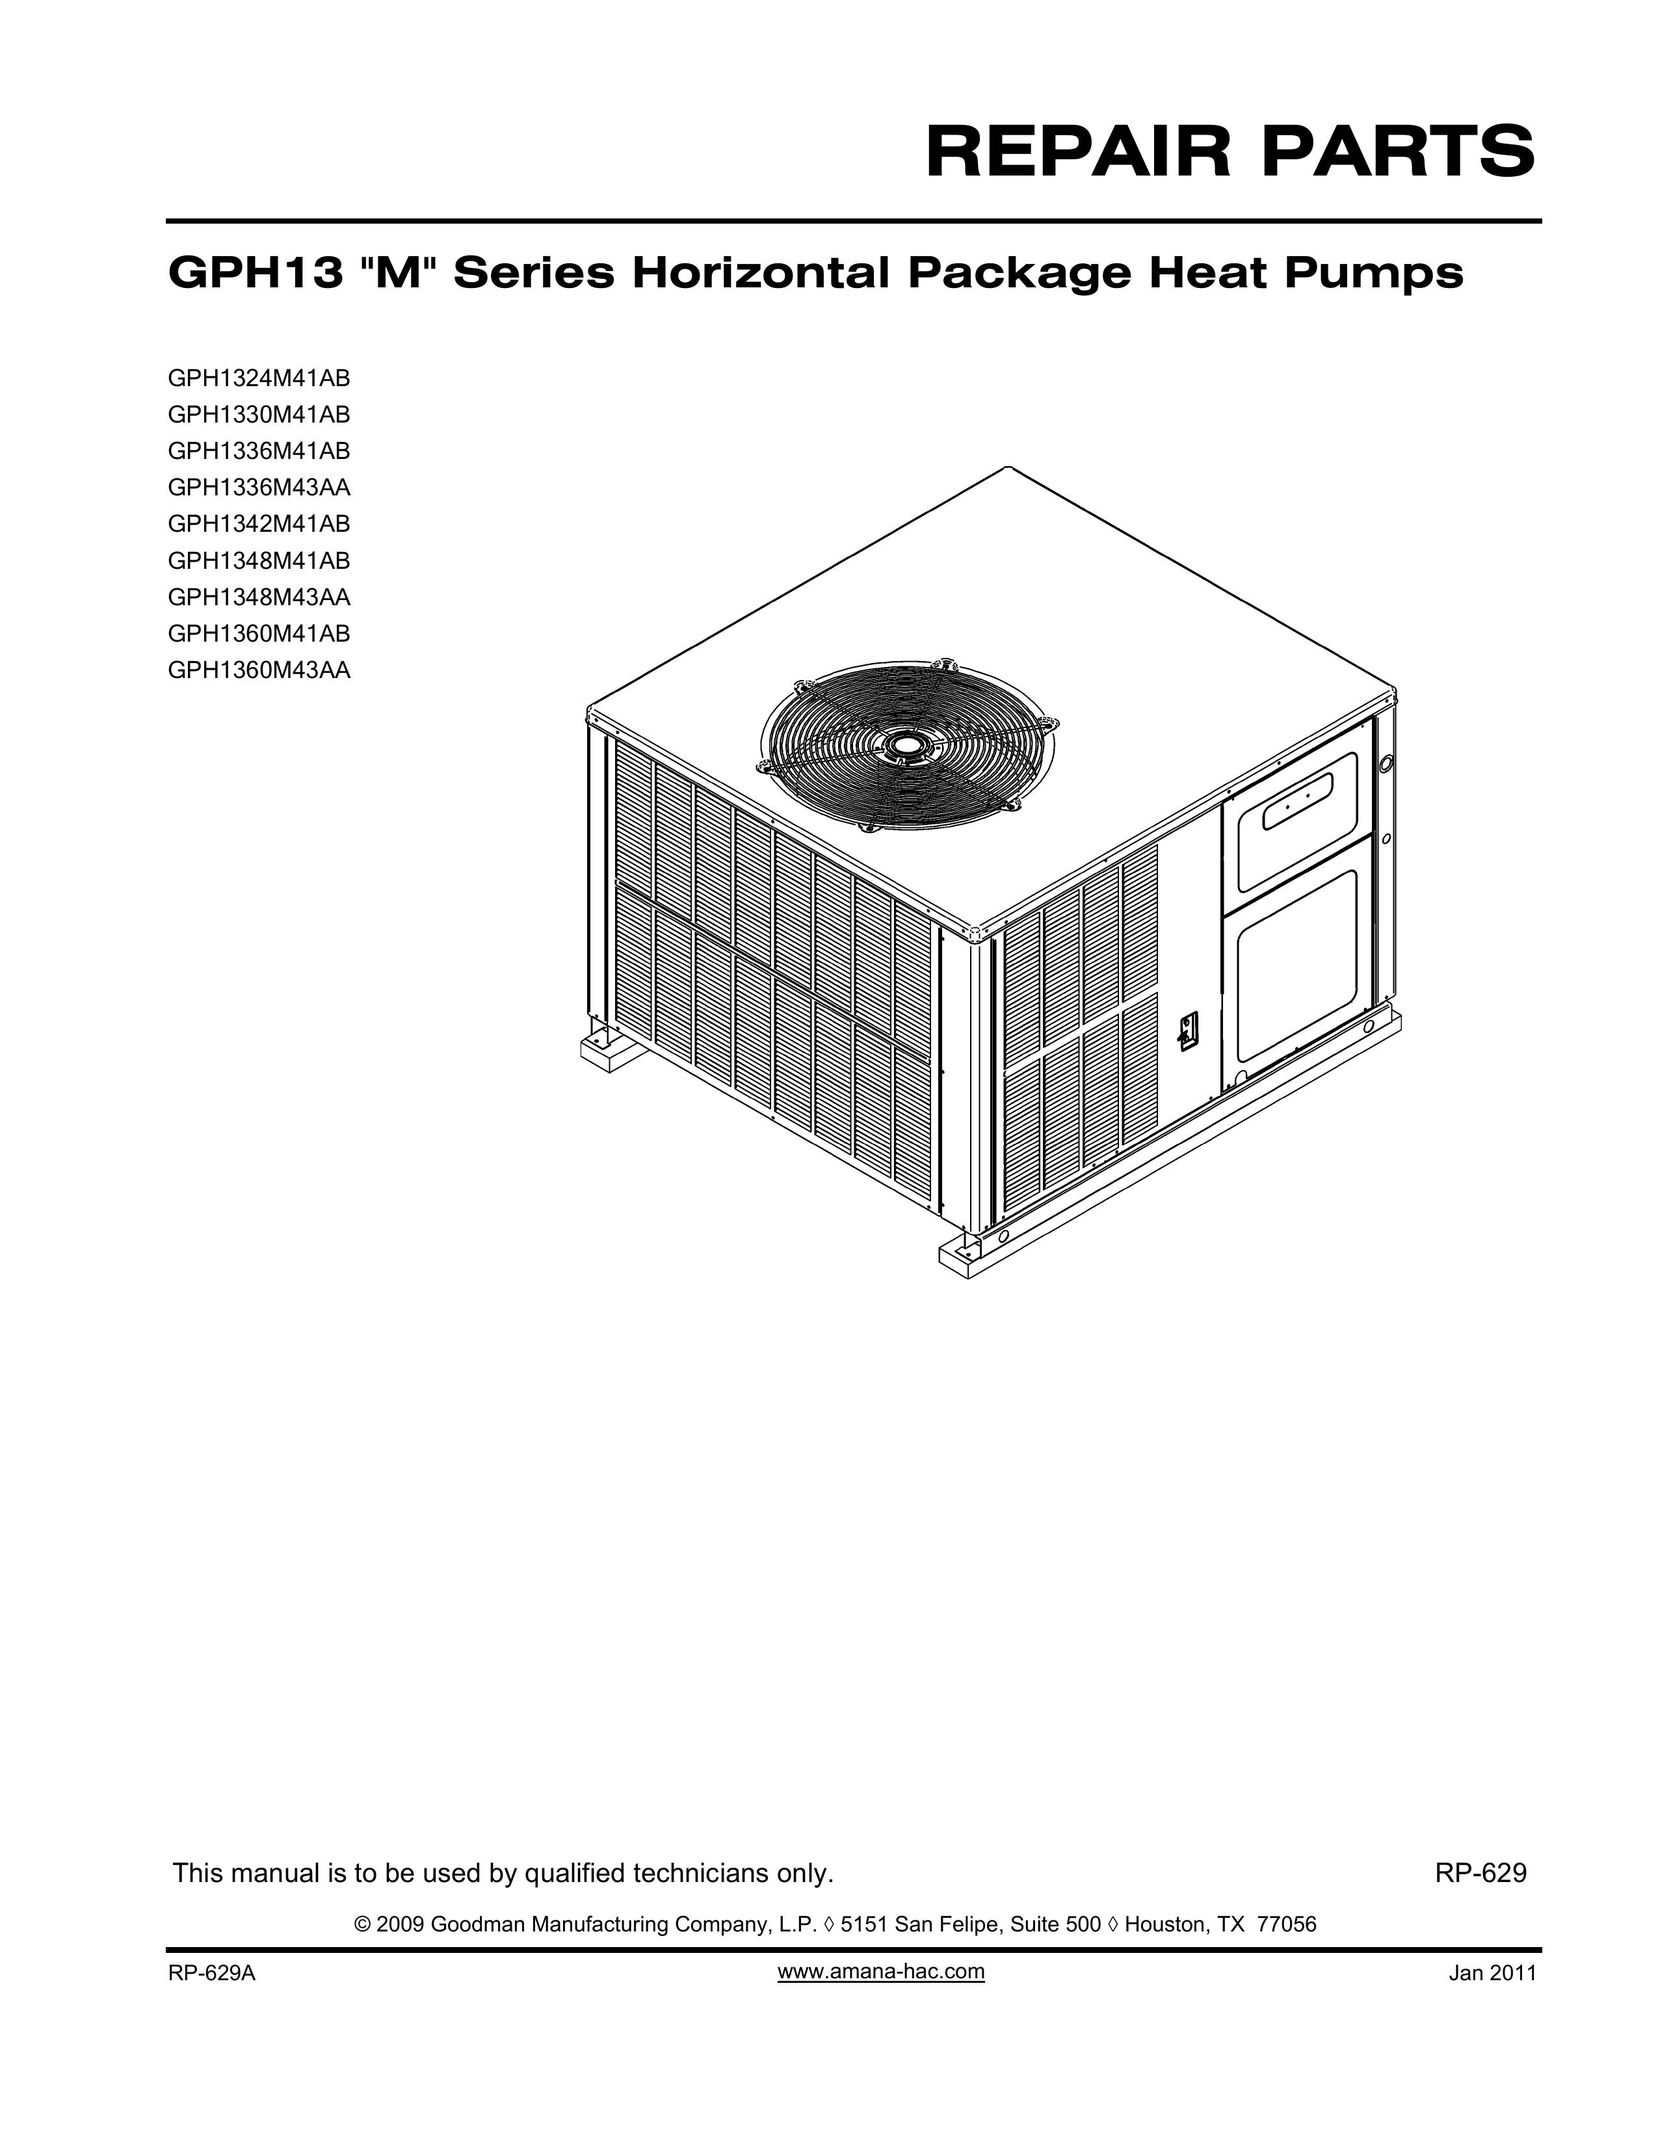 Goodman Mfg GPH1348M43AA Heat Pump User Manual